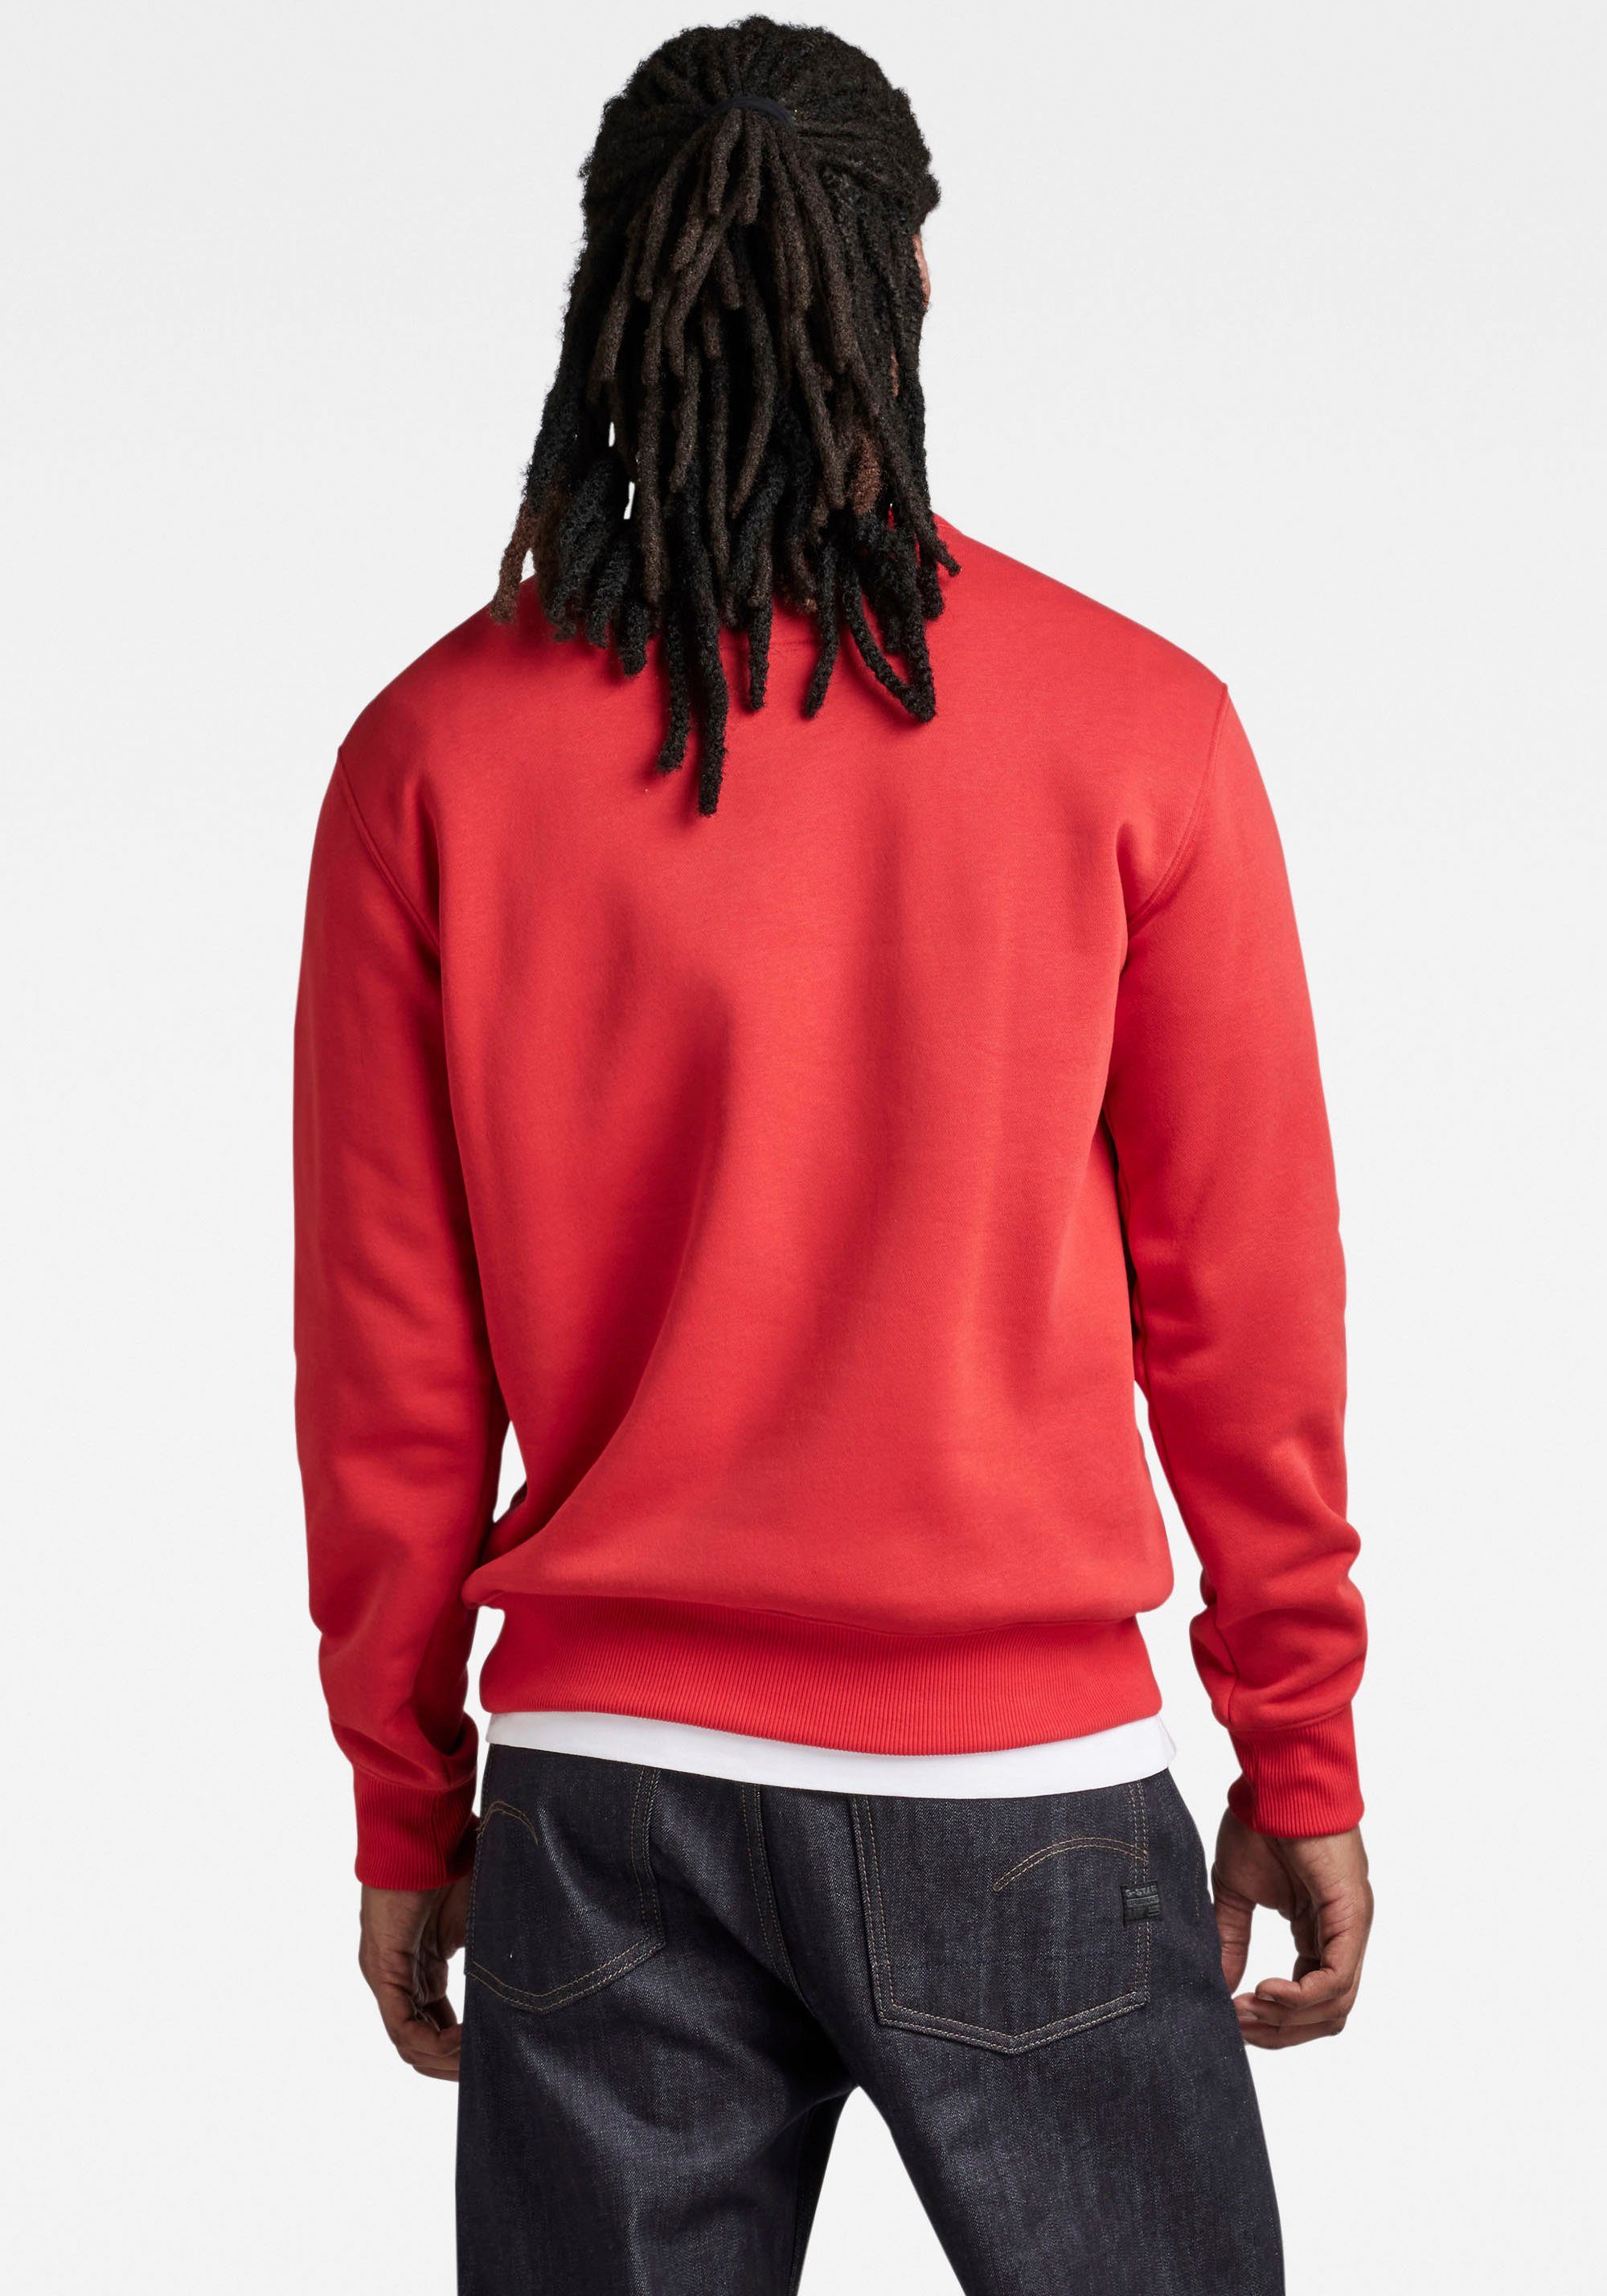 G-Star RAW Originals Acid Sweatshirt Red Sweatshirt